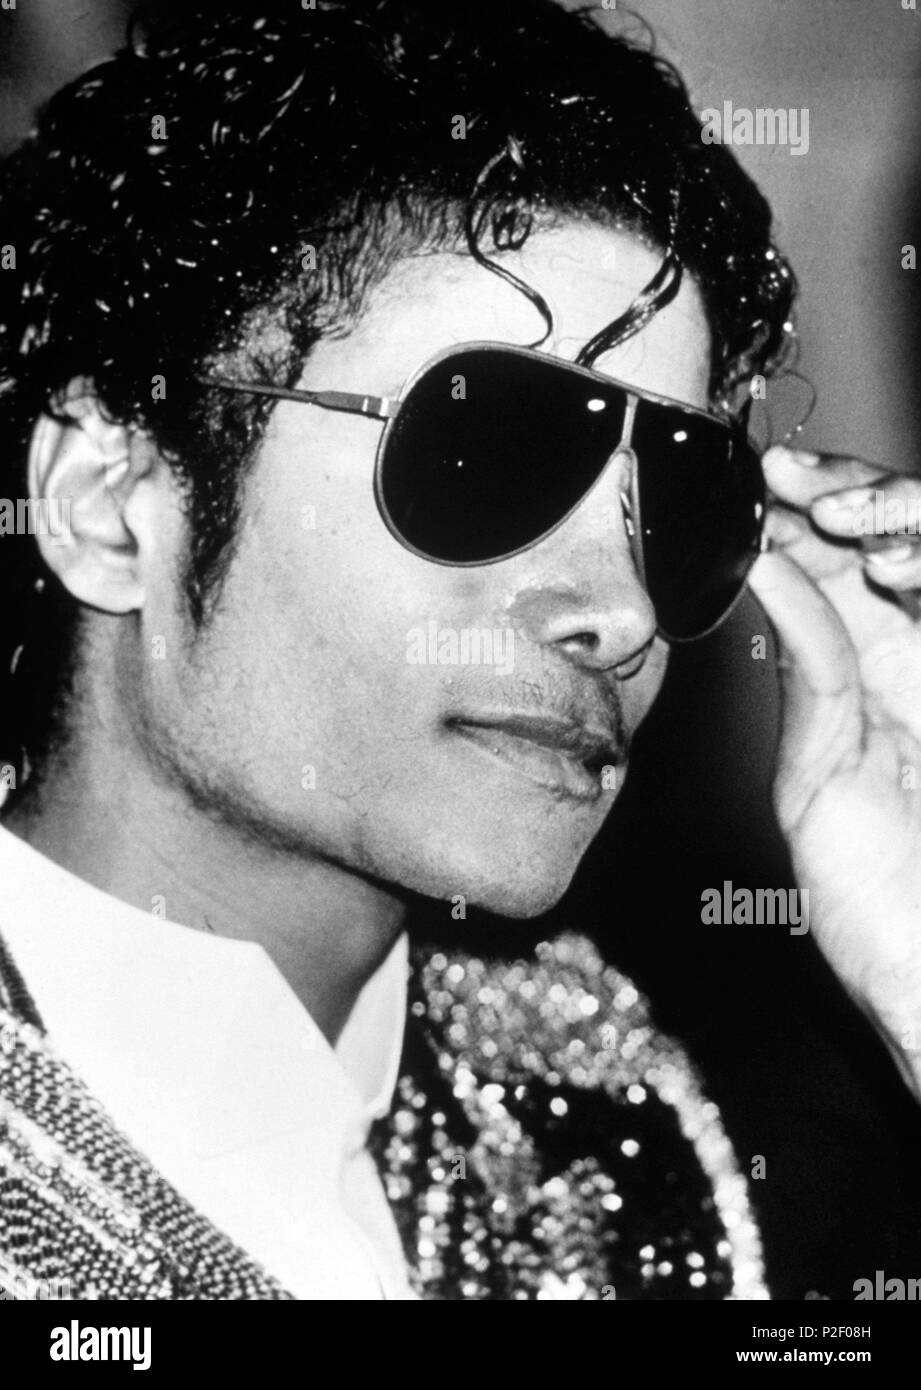 Singer Michael Jackson. 1984. Stock Photo